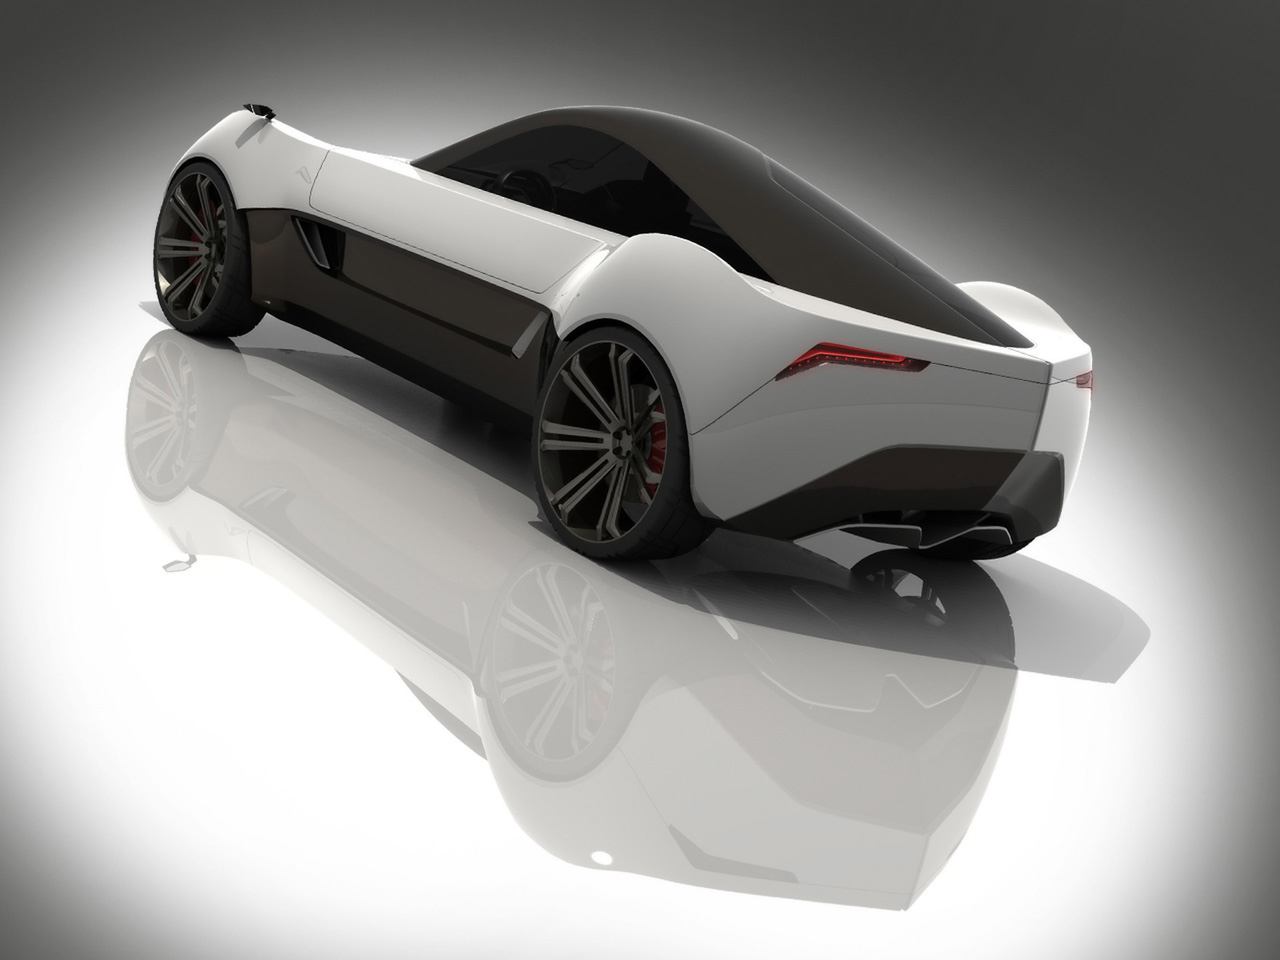 2009 GT Crossover Concept Design by Sam Johnson